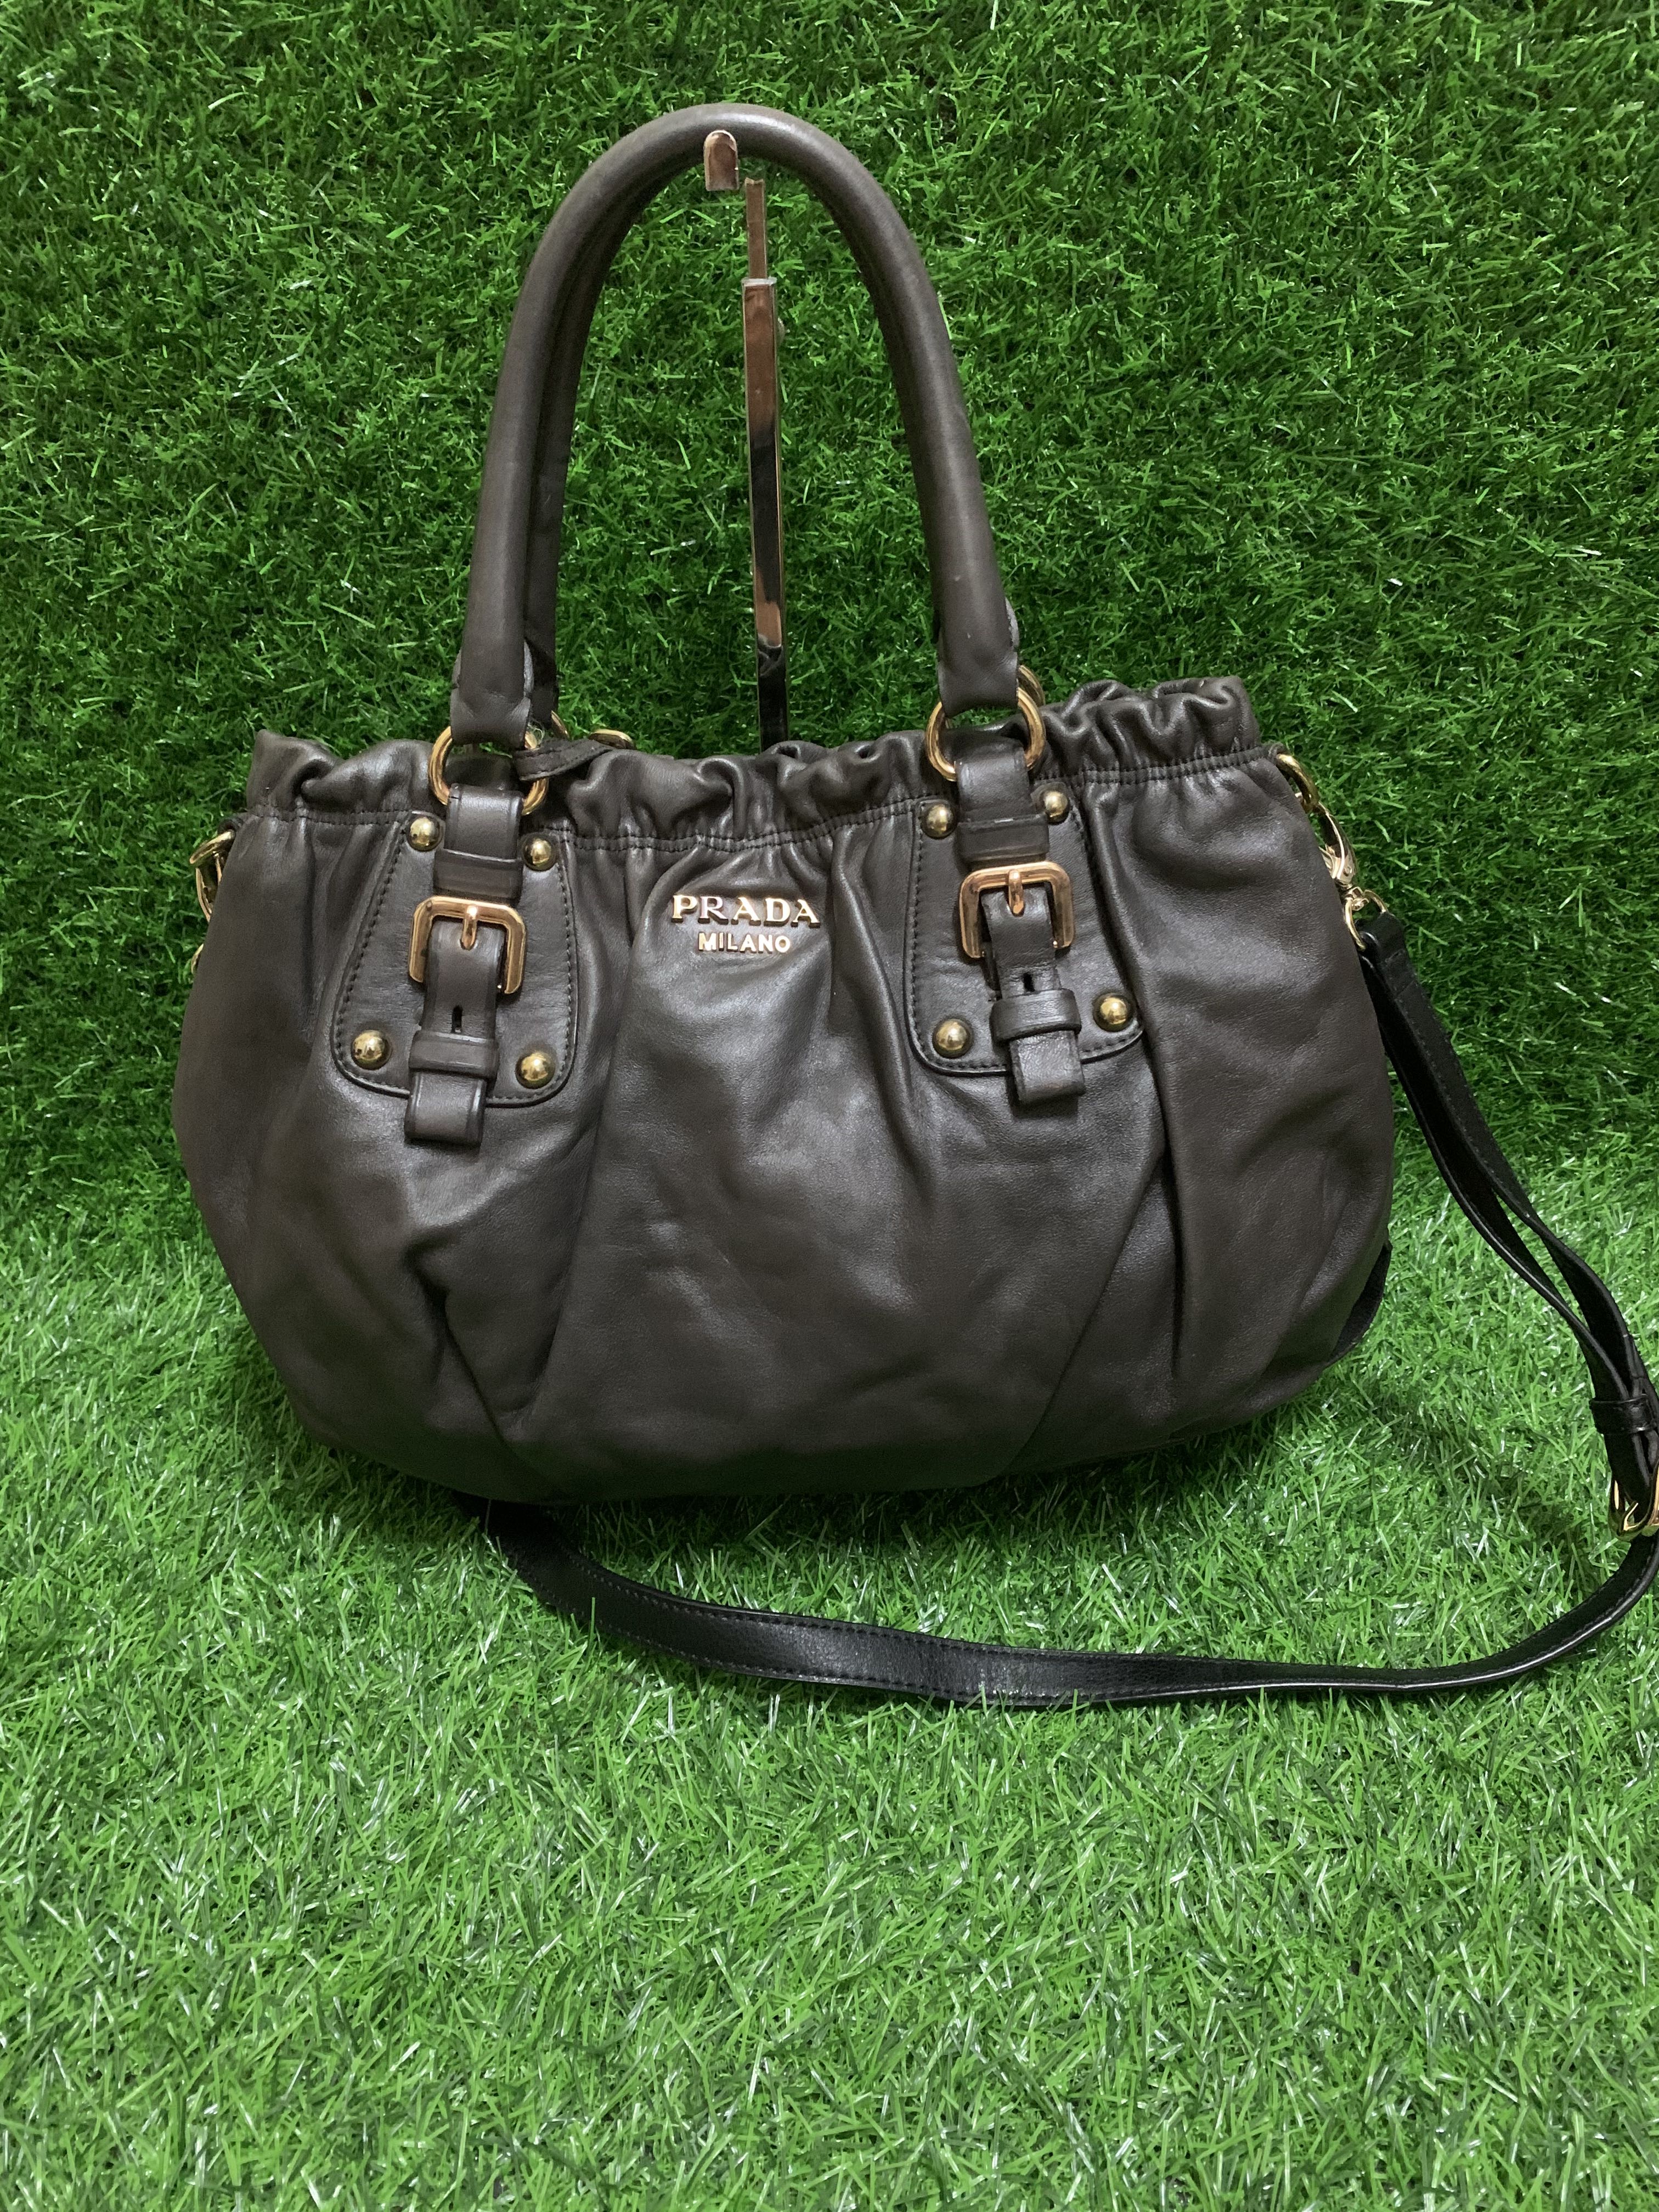 Buy Mydream Prada Milano Leather Handbags for Women Set of 7 at Amazon.in